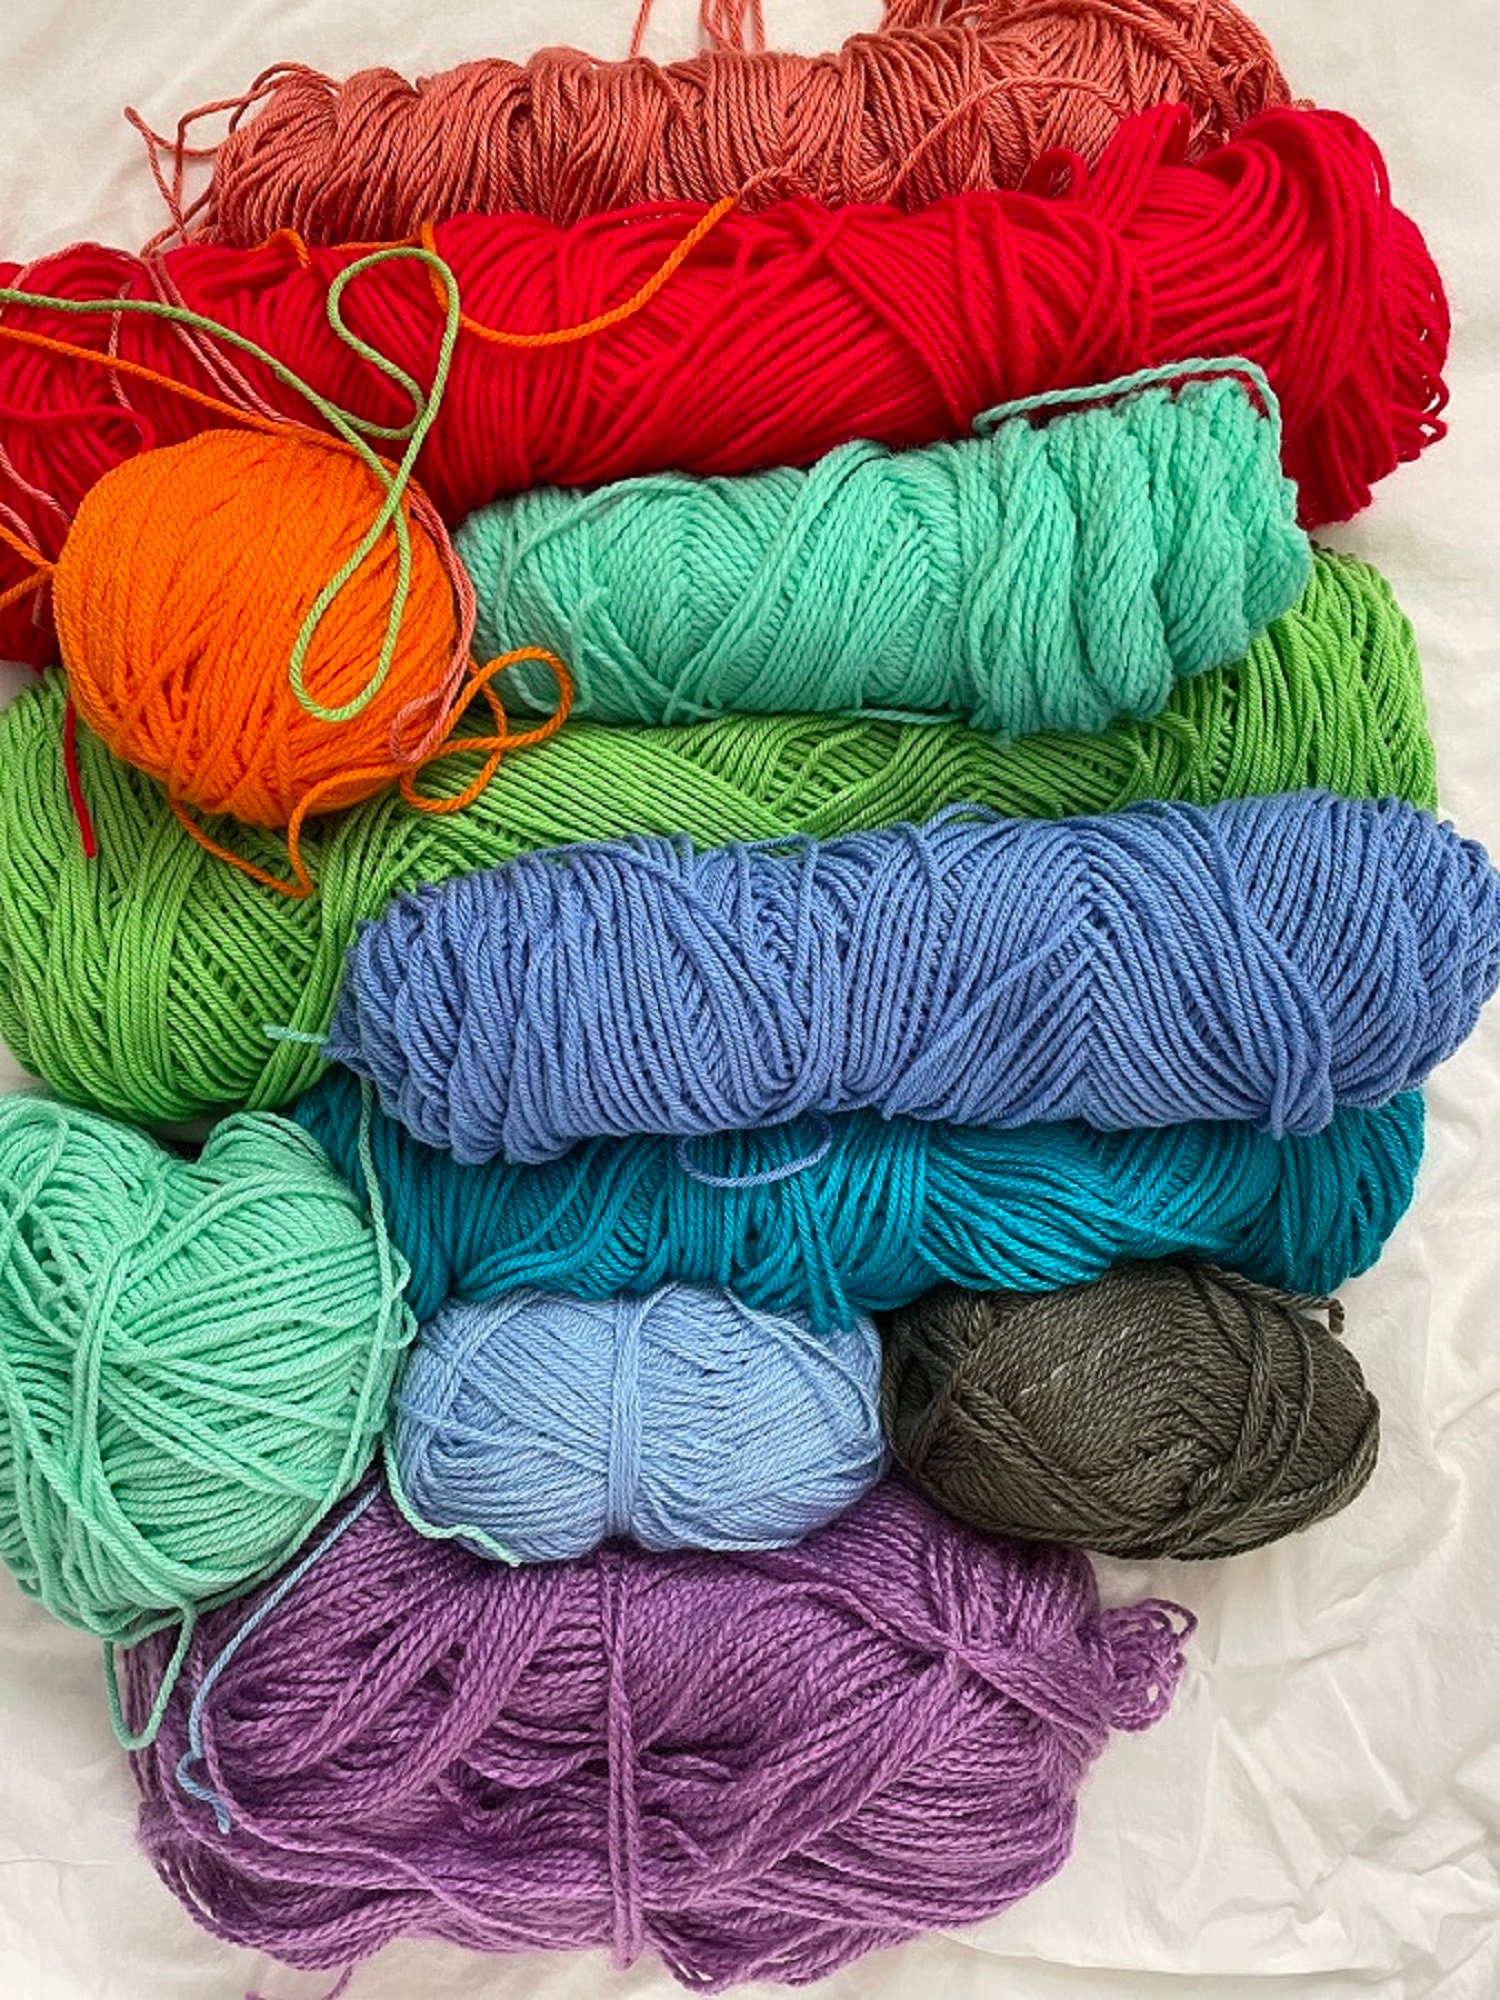 Crochet PATTERN Tutorial, BASKET pattern Only Digital, Instant Pdf, Scrap  Yarn Crochet Purse, Tote Bag, Colorful Basket, Boho Inspired 